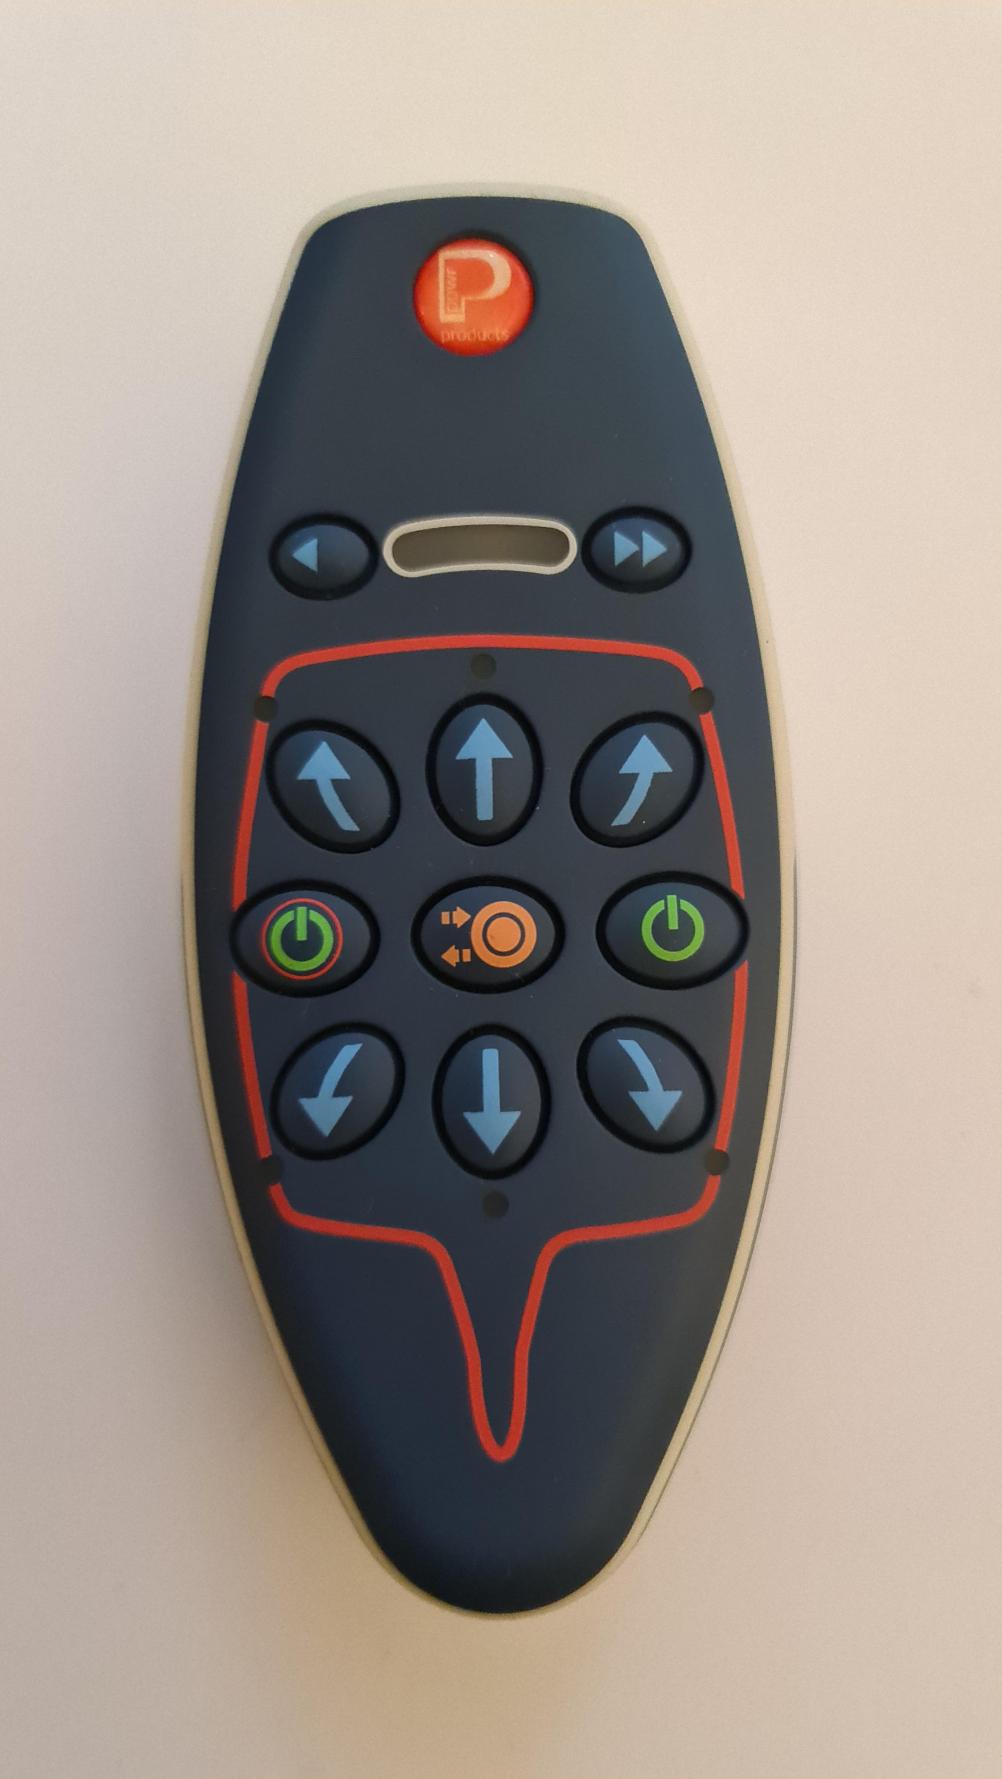 Powrwheel  Remote Control - Front Image